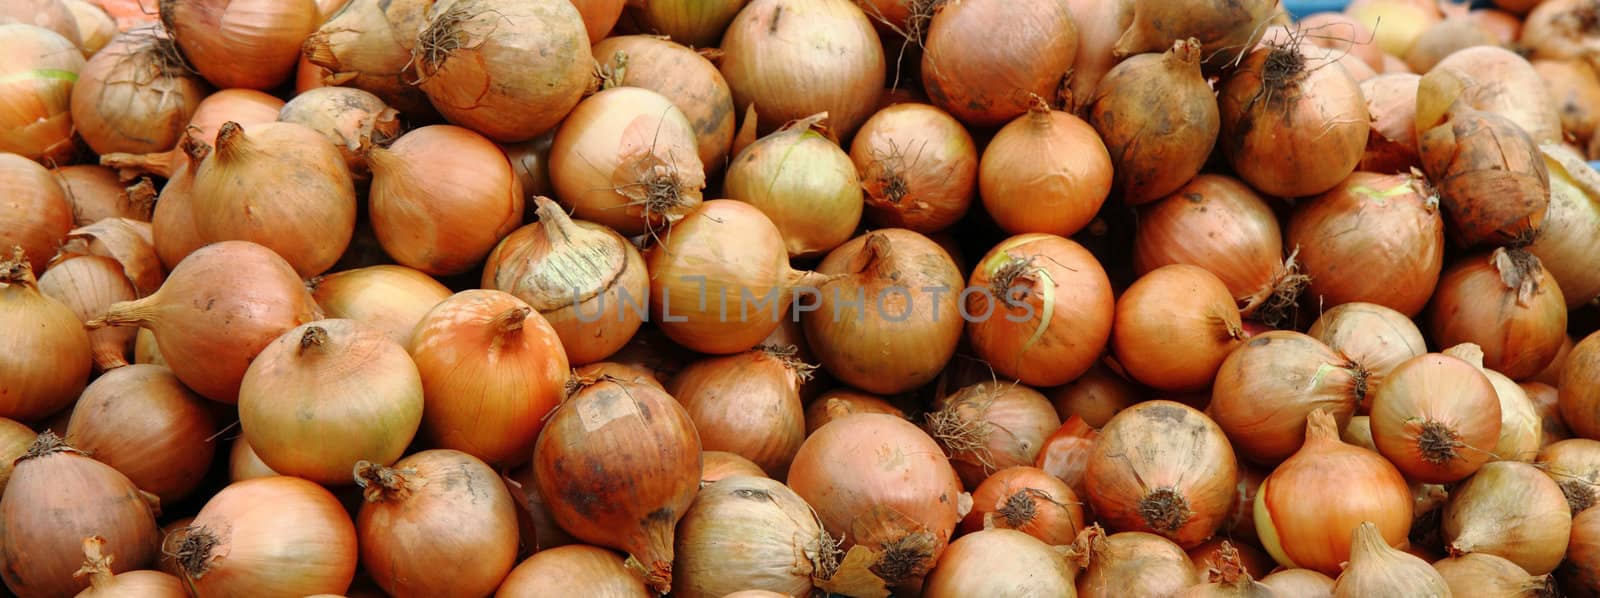 onion background by jonnysek